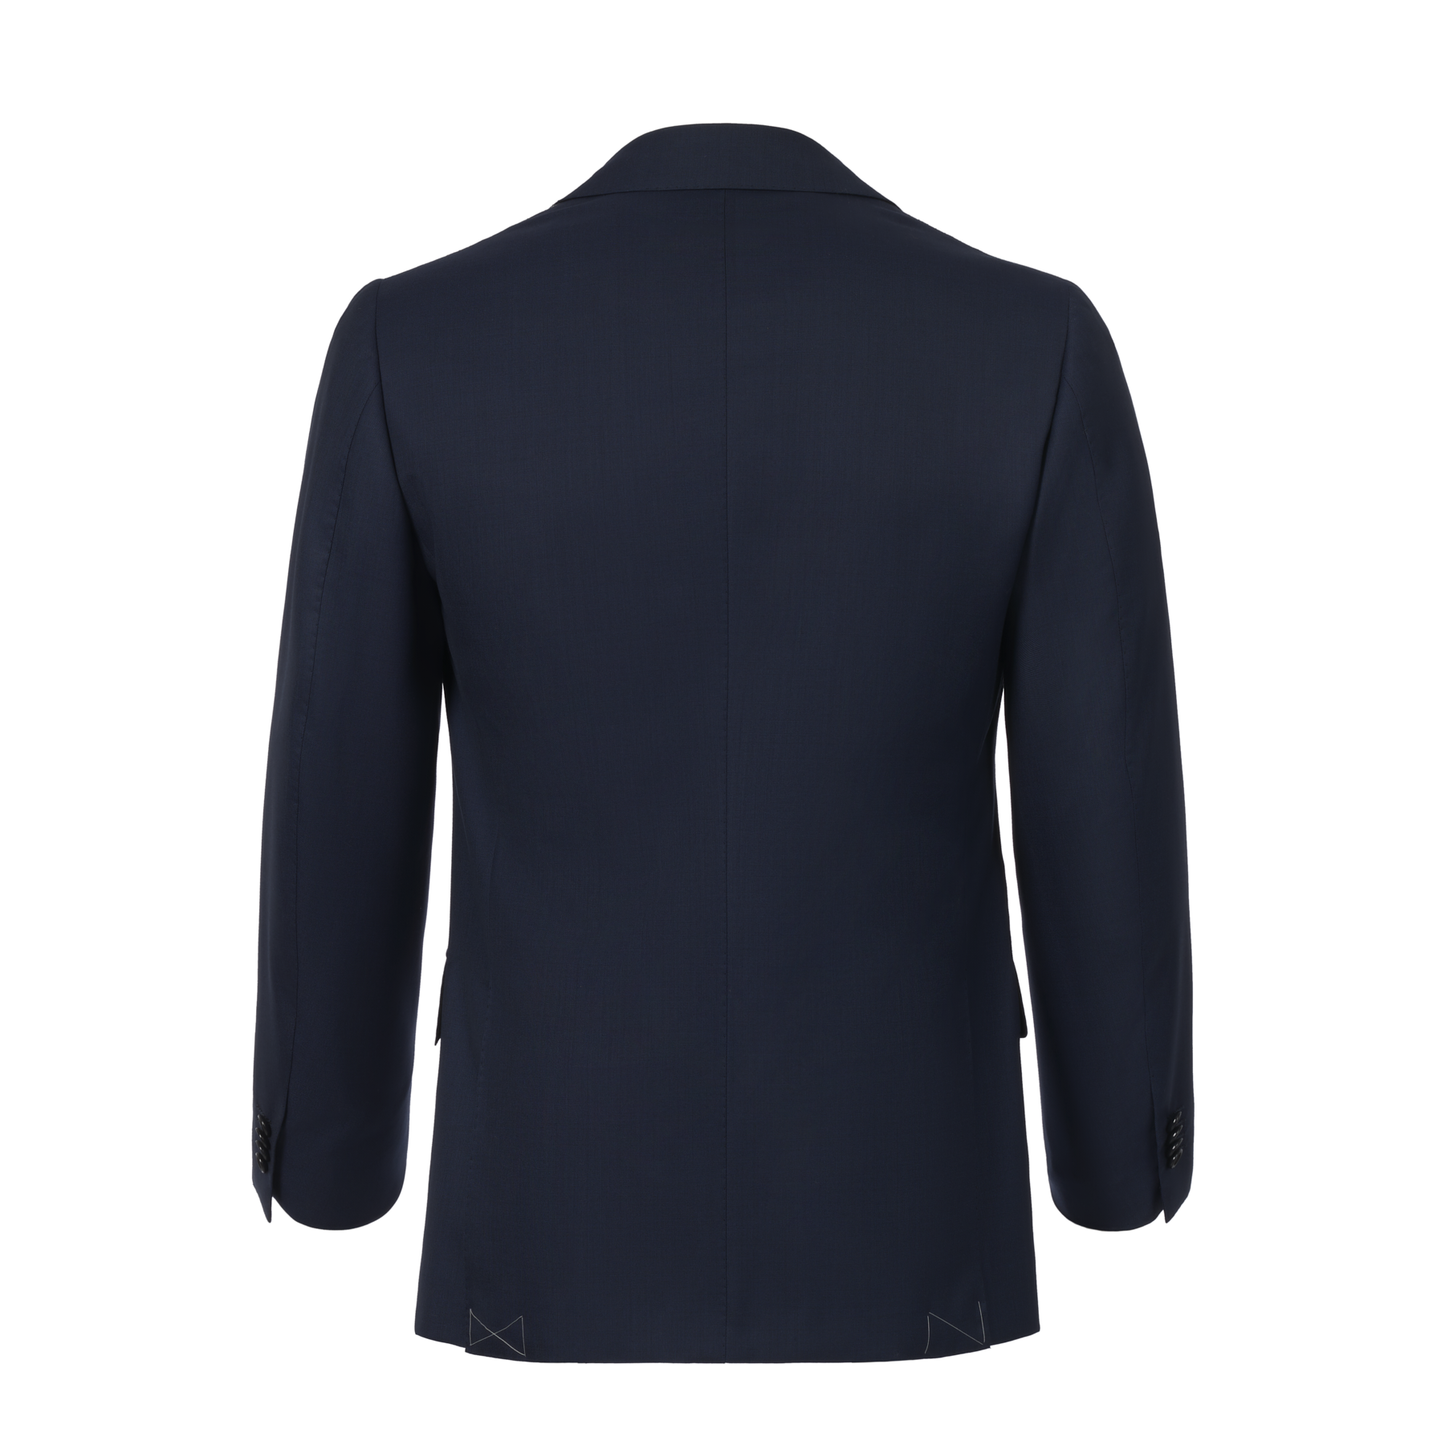 Cesare Attolini Single-Breasted Wool Suit in Dark Blue - SARTALE